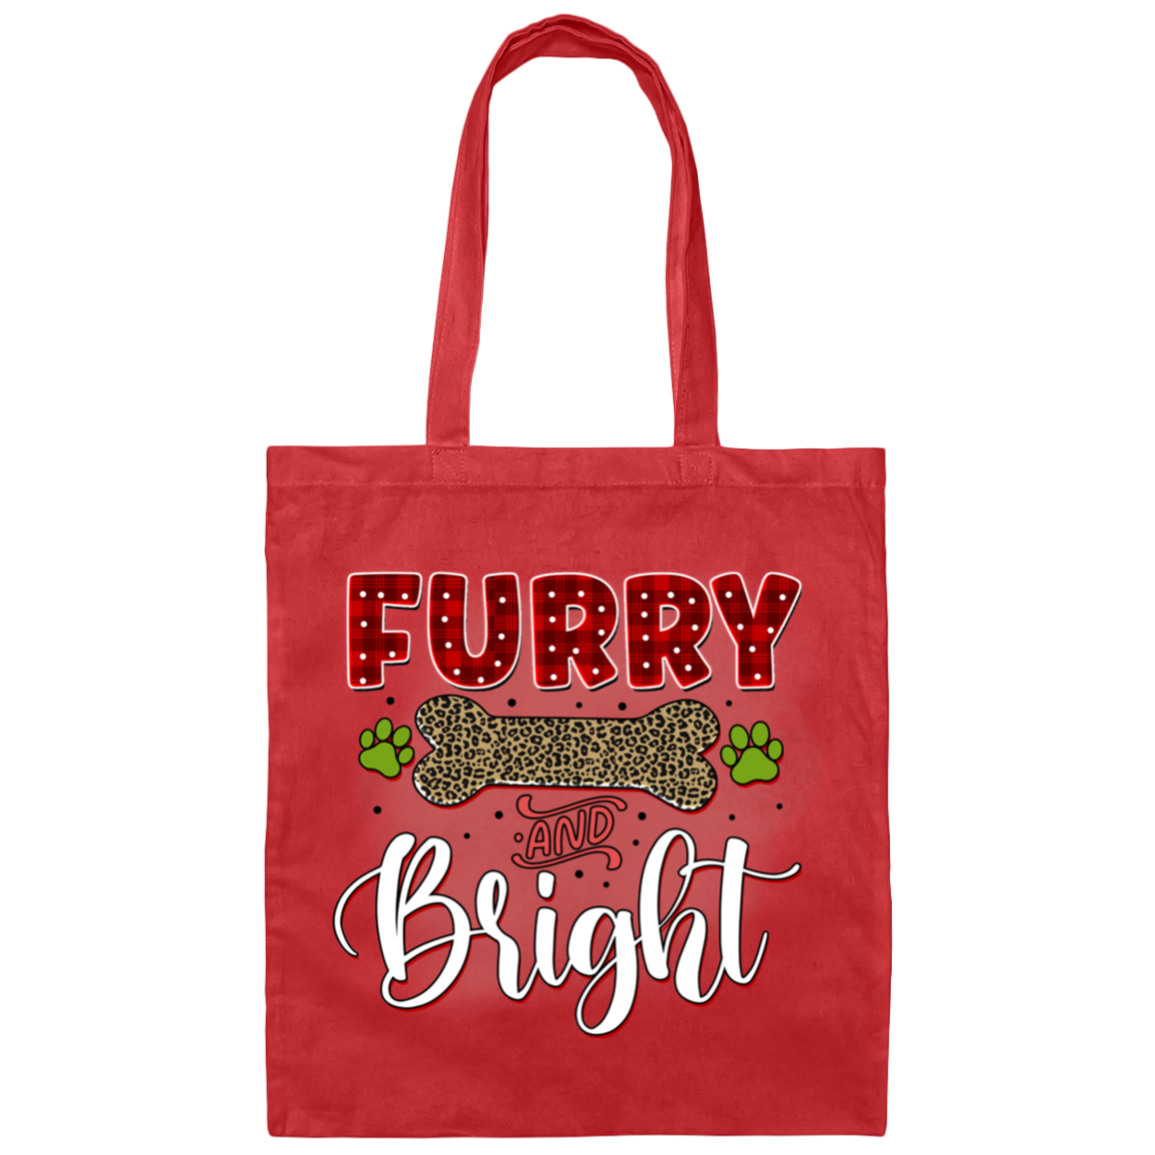 Furry & Bright Christmas Dog Canvas Tote Bag